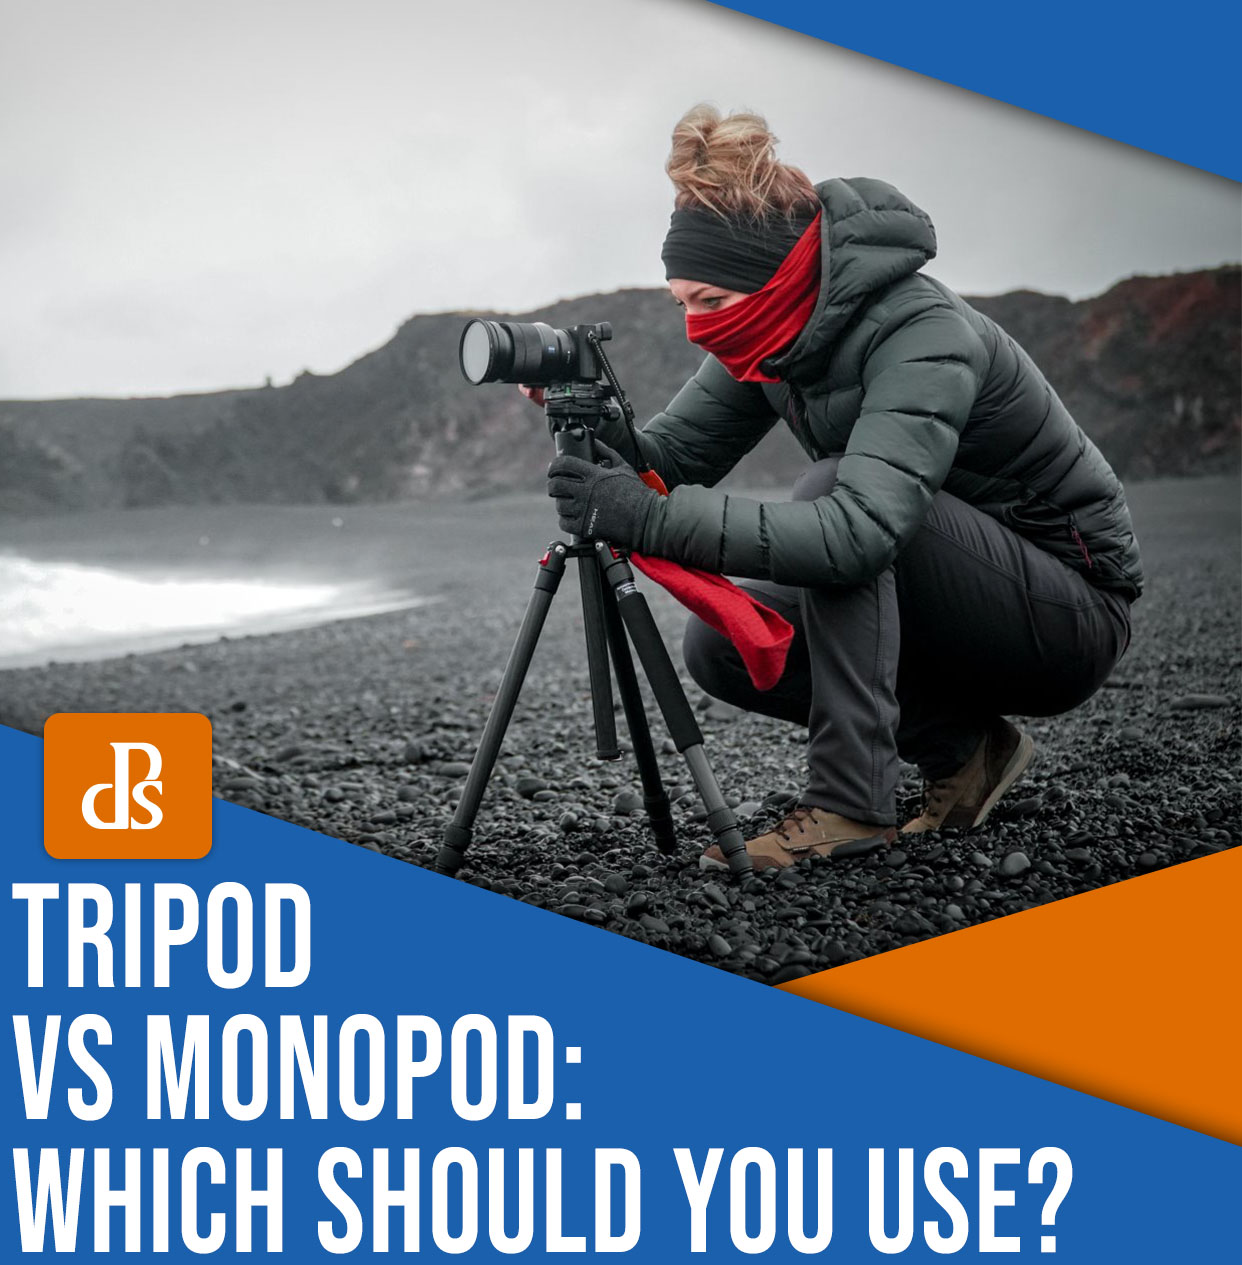 Tripod vs monopod: Which should you use?